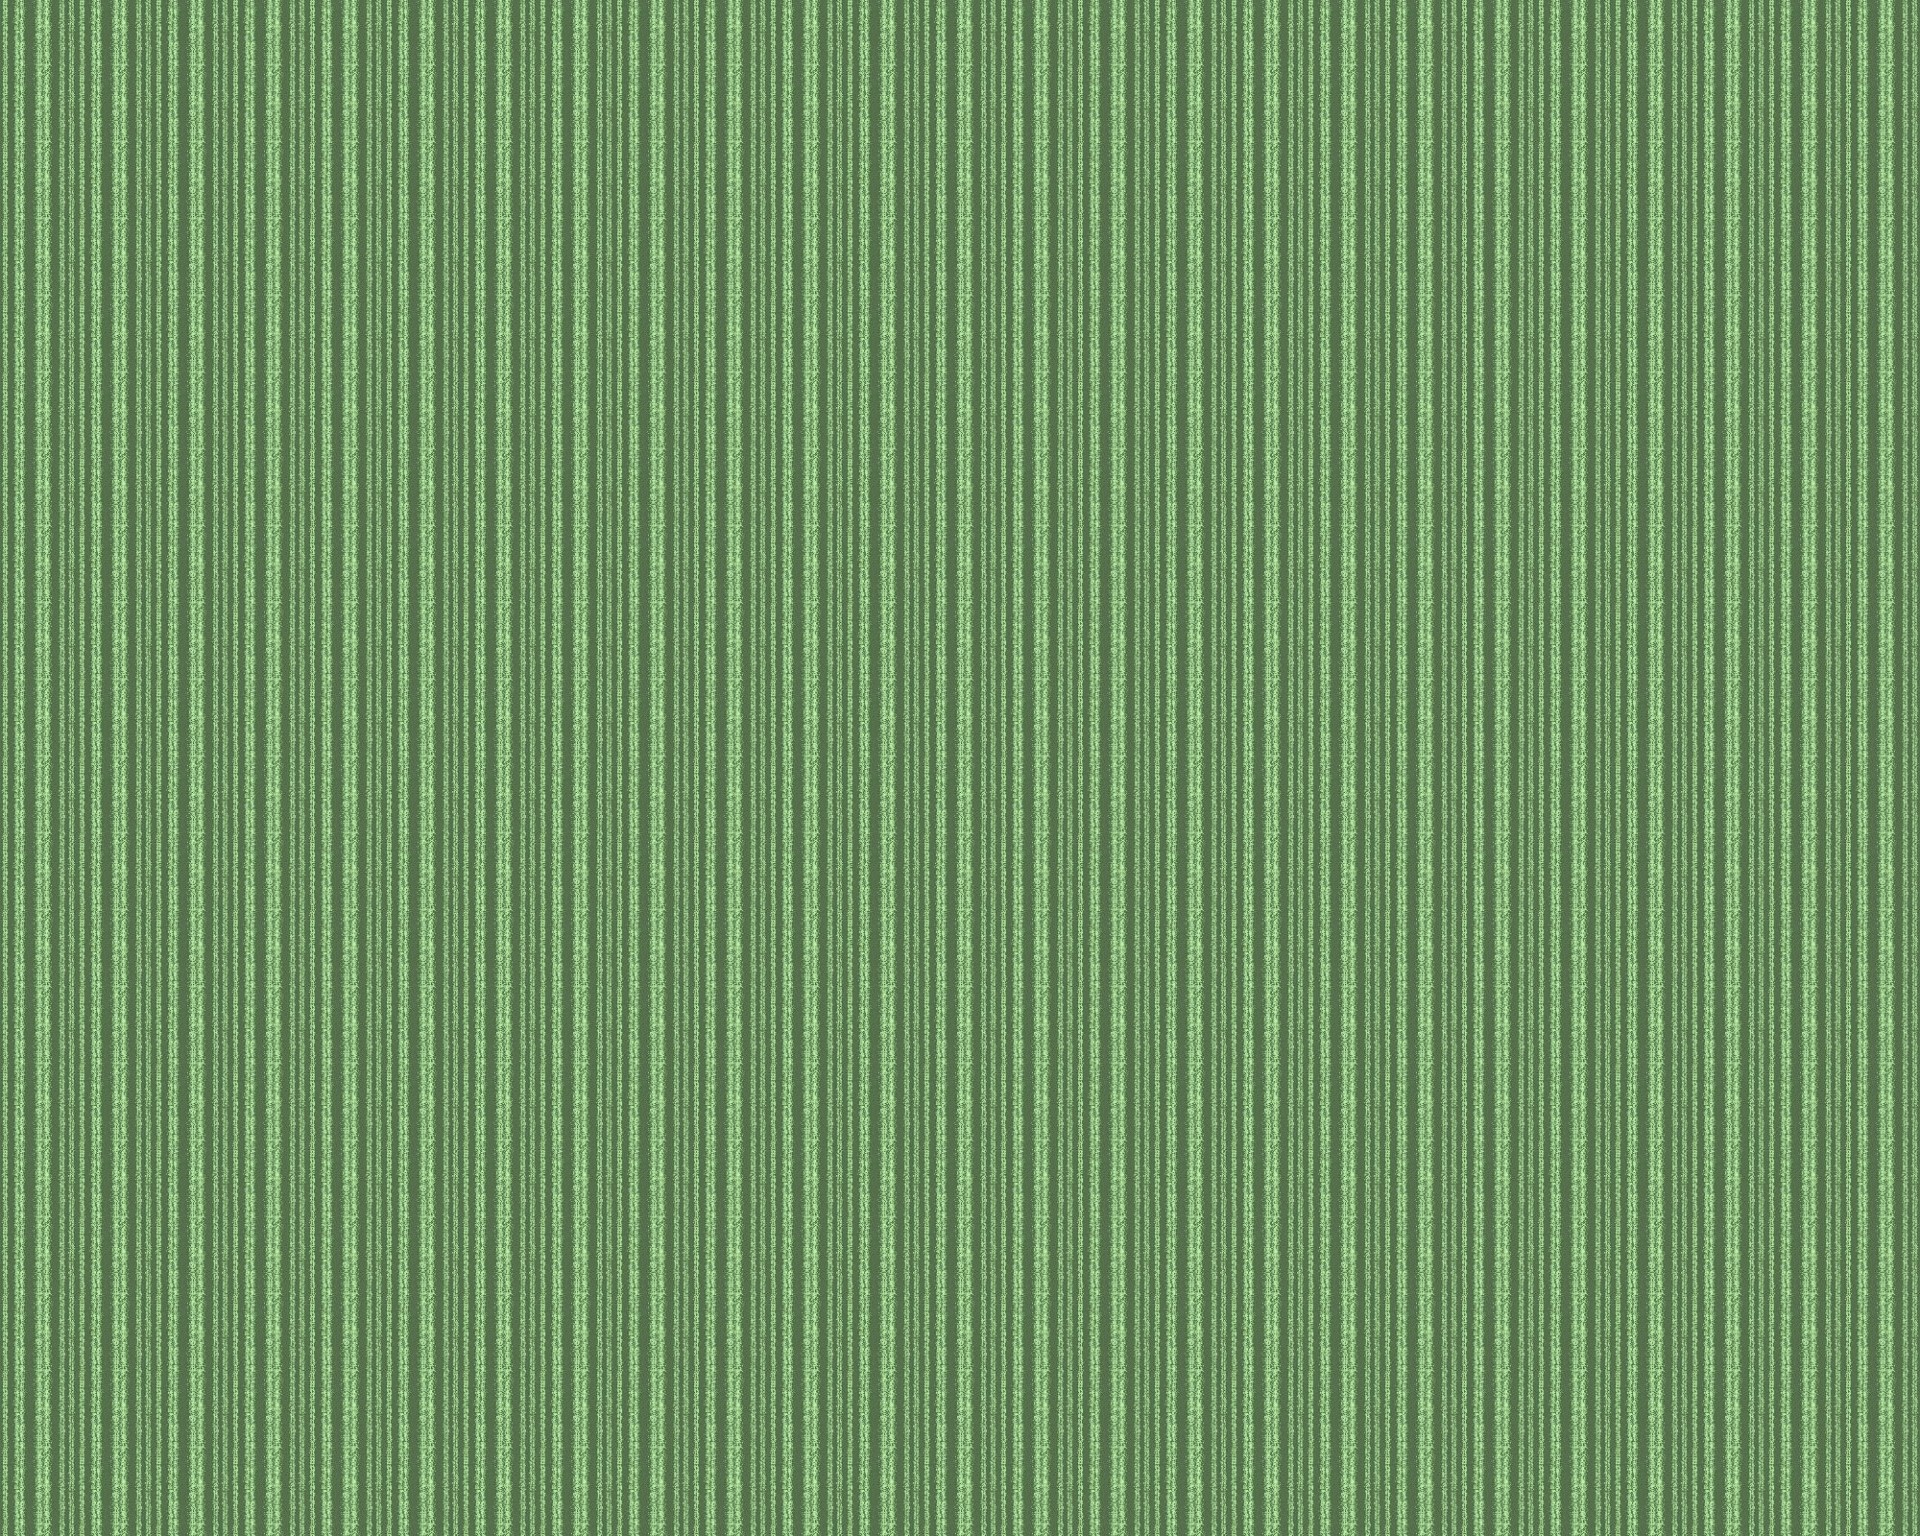 Background Stripes 2015 (1)